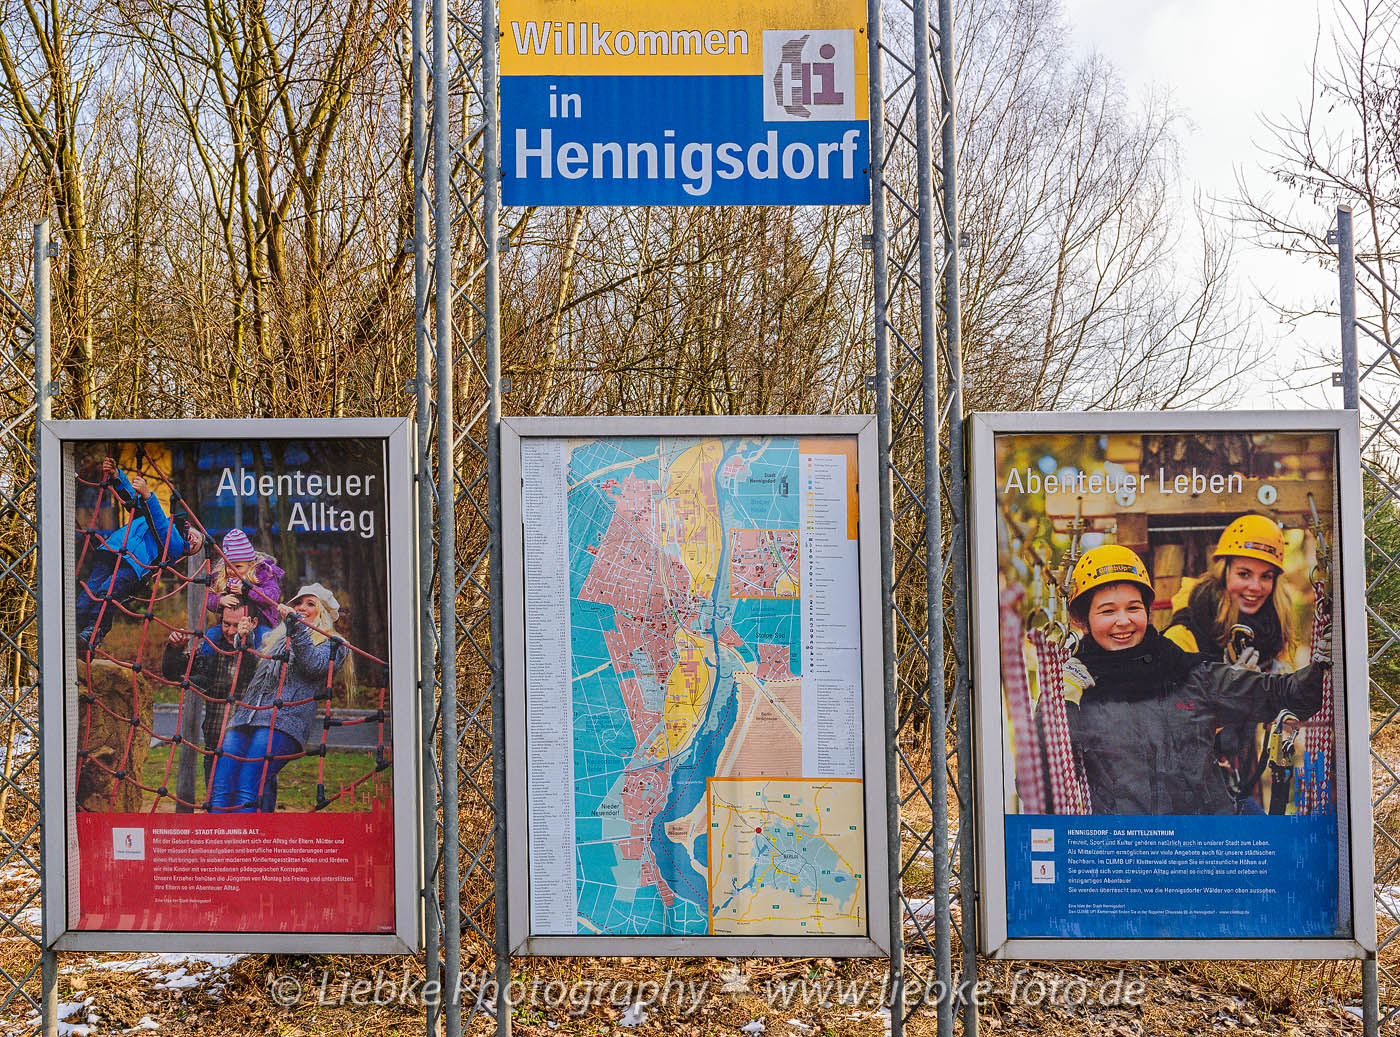 Großbildkampagne Stadtwerbung Hennigsdorf